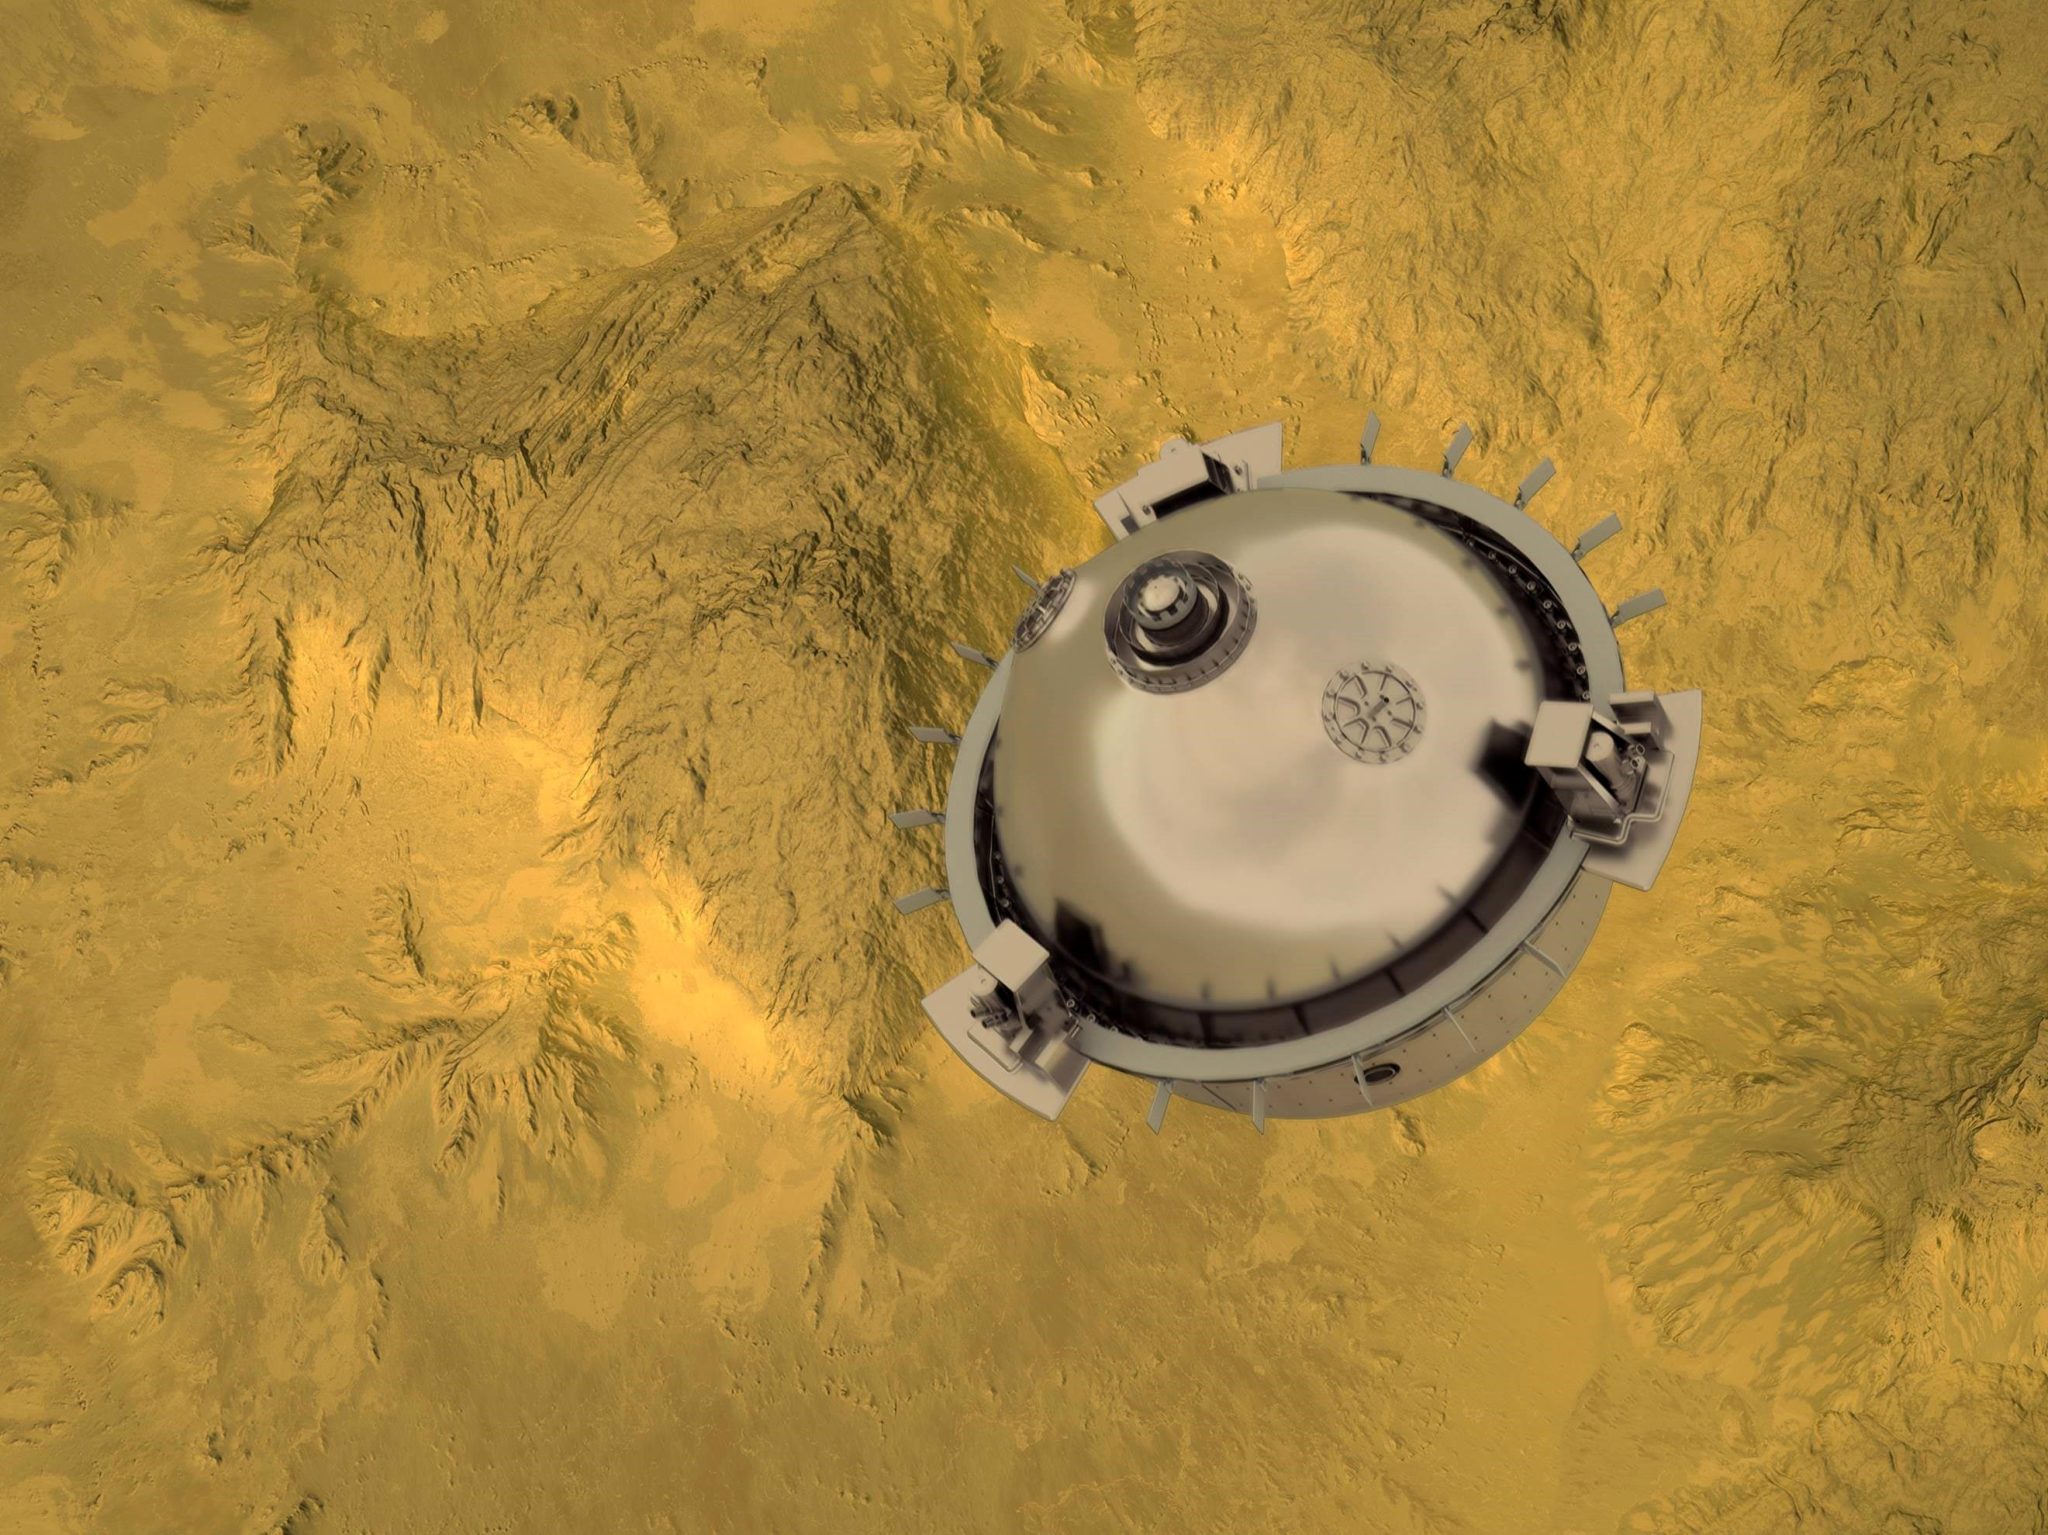 DAVINCI probe near the surface of Venus